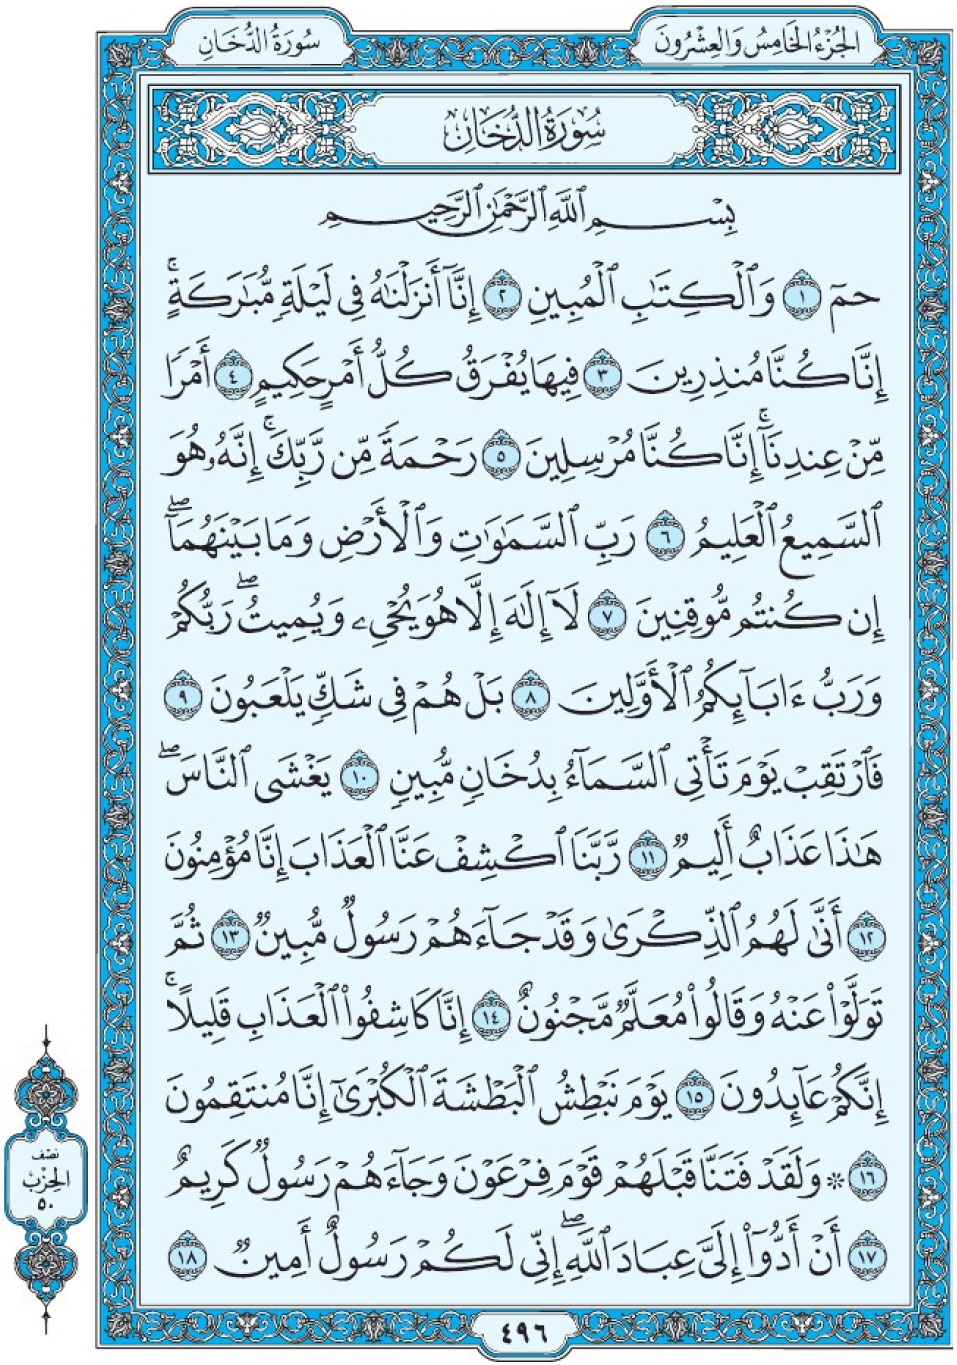 Коран Мединский мусхаф страница 496, сура 44 Ад-Духан سورة ٤٤ الدخان 